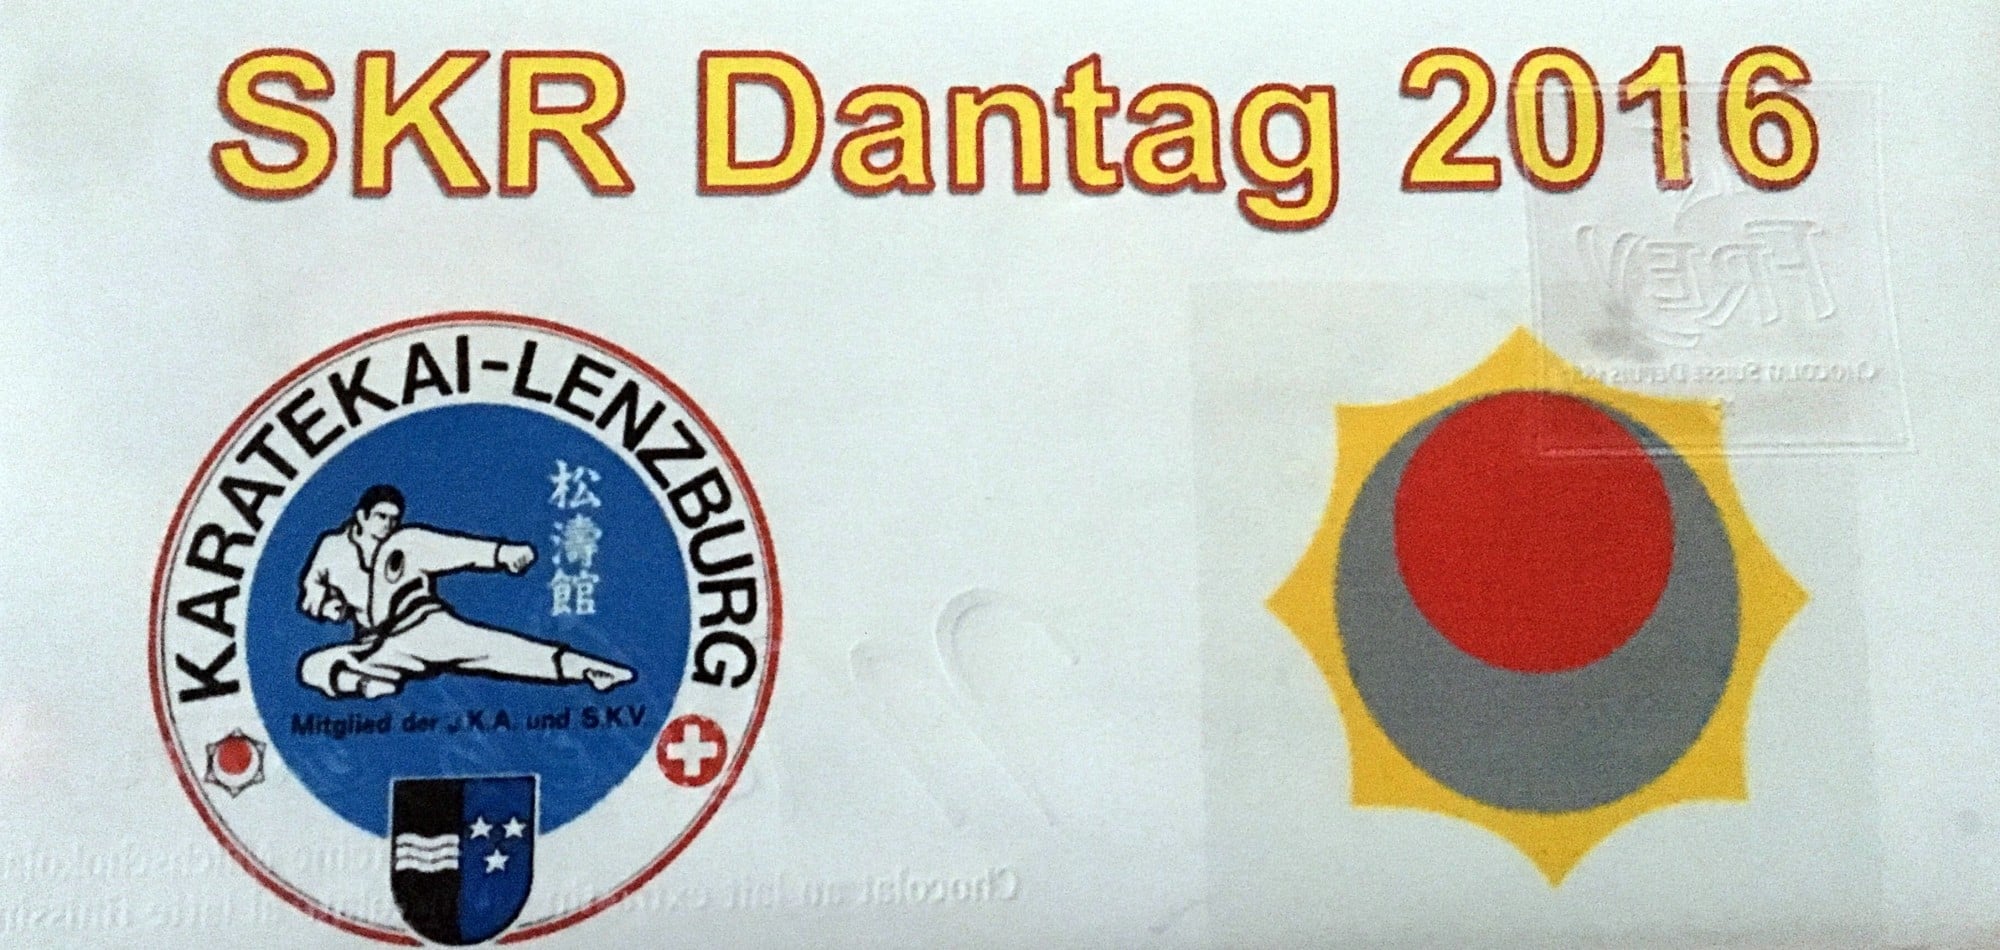 Karatekai Basel - SKR Dantag 2016 in Lenzburg